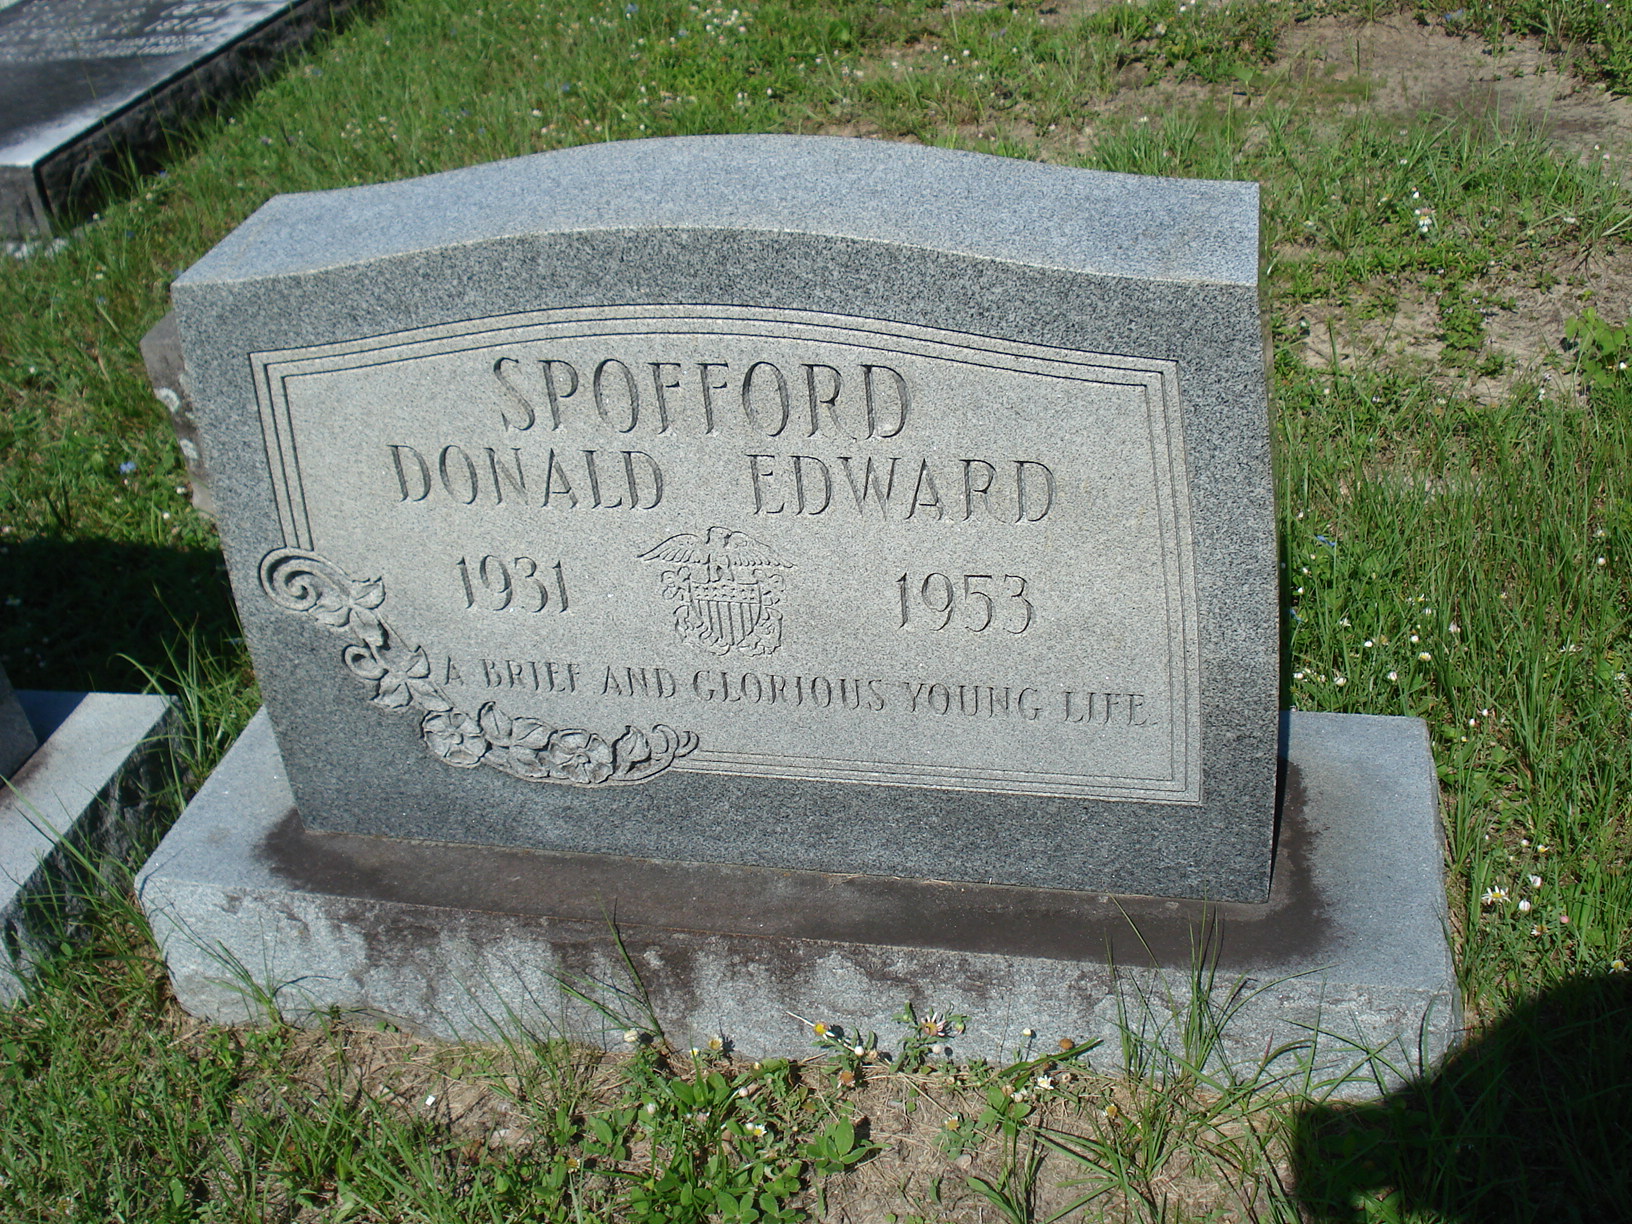 Donald Edward Spofford